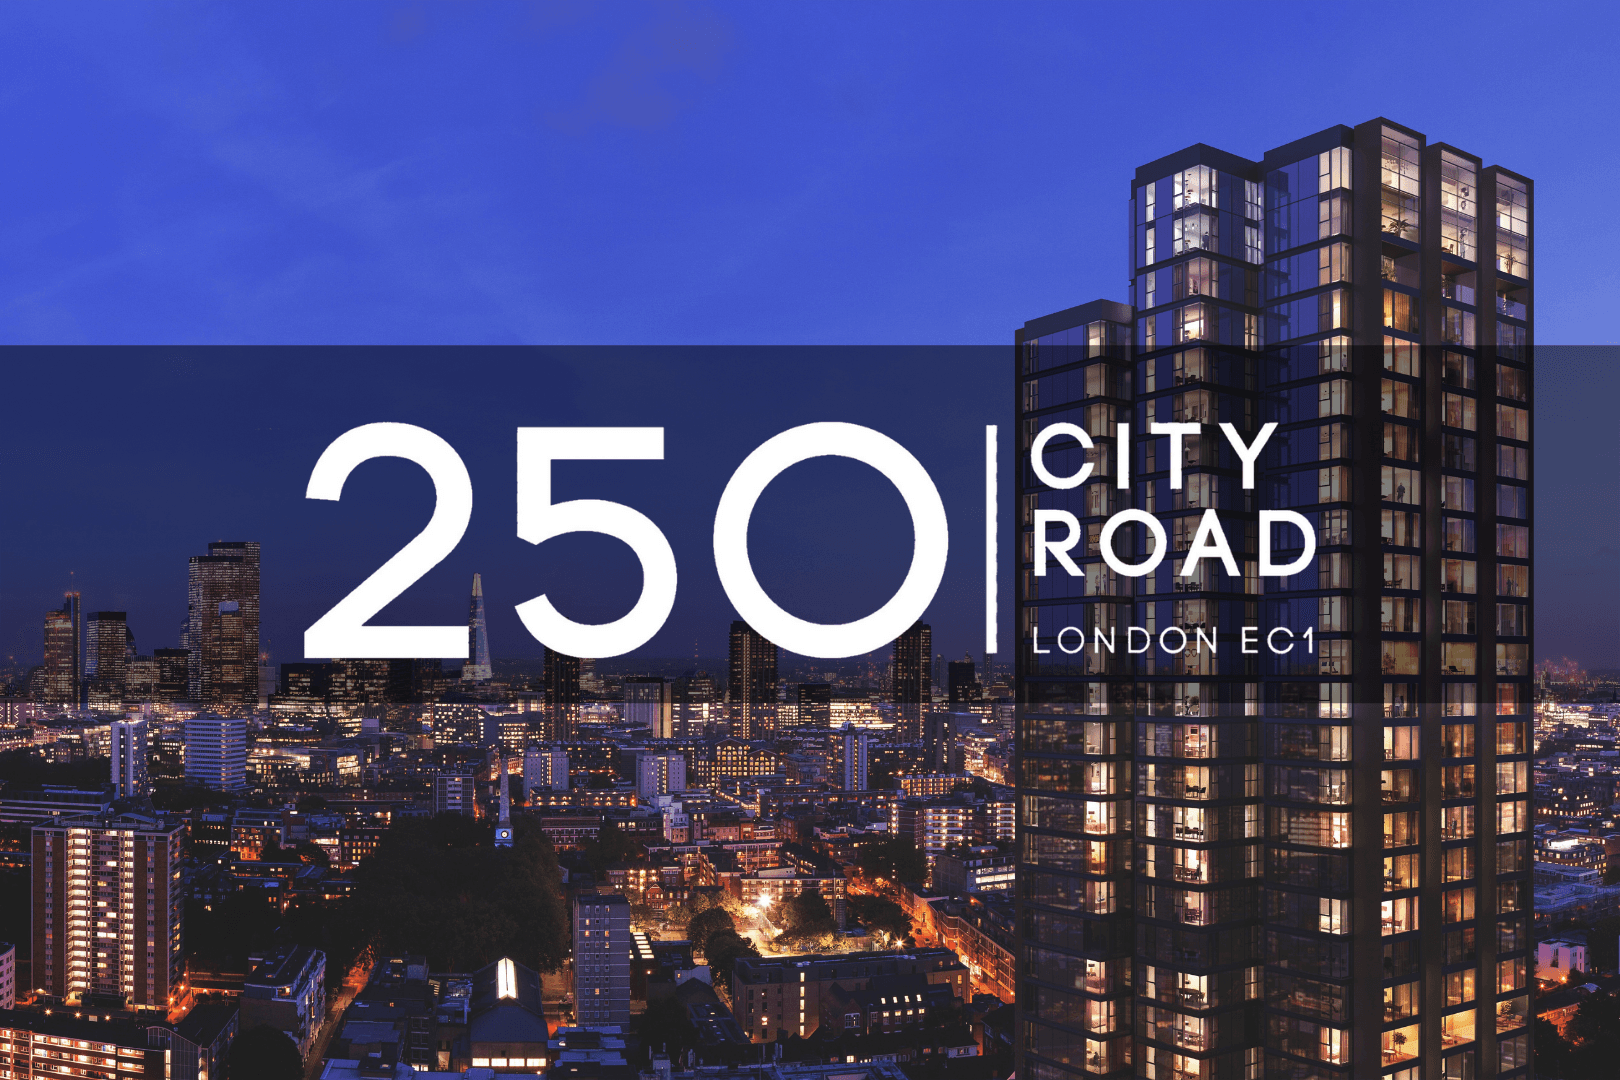 250 City Road